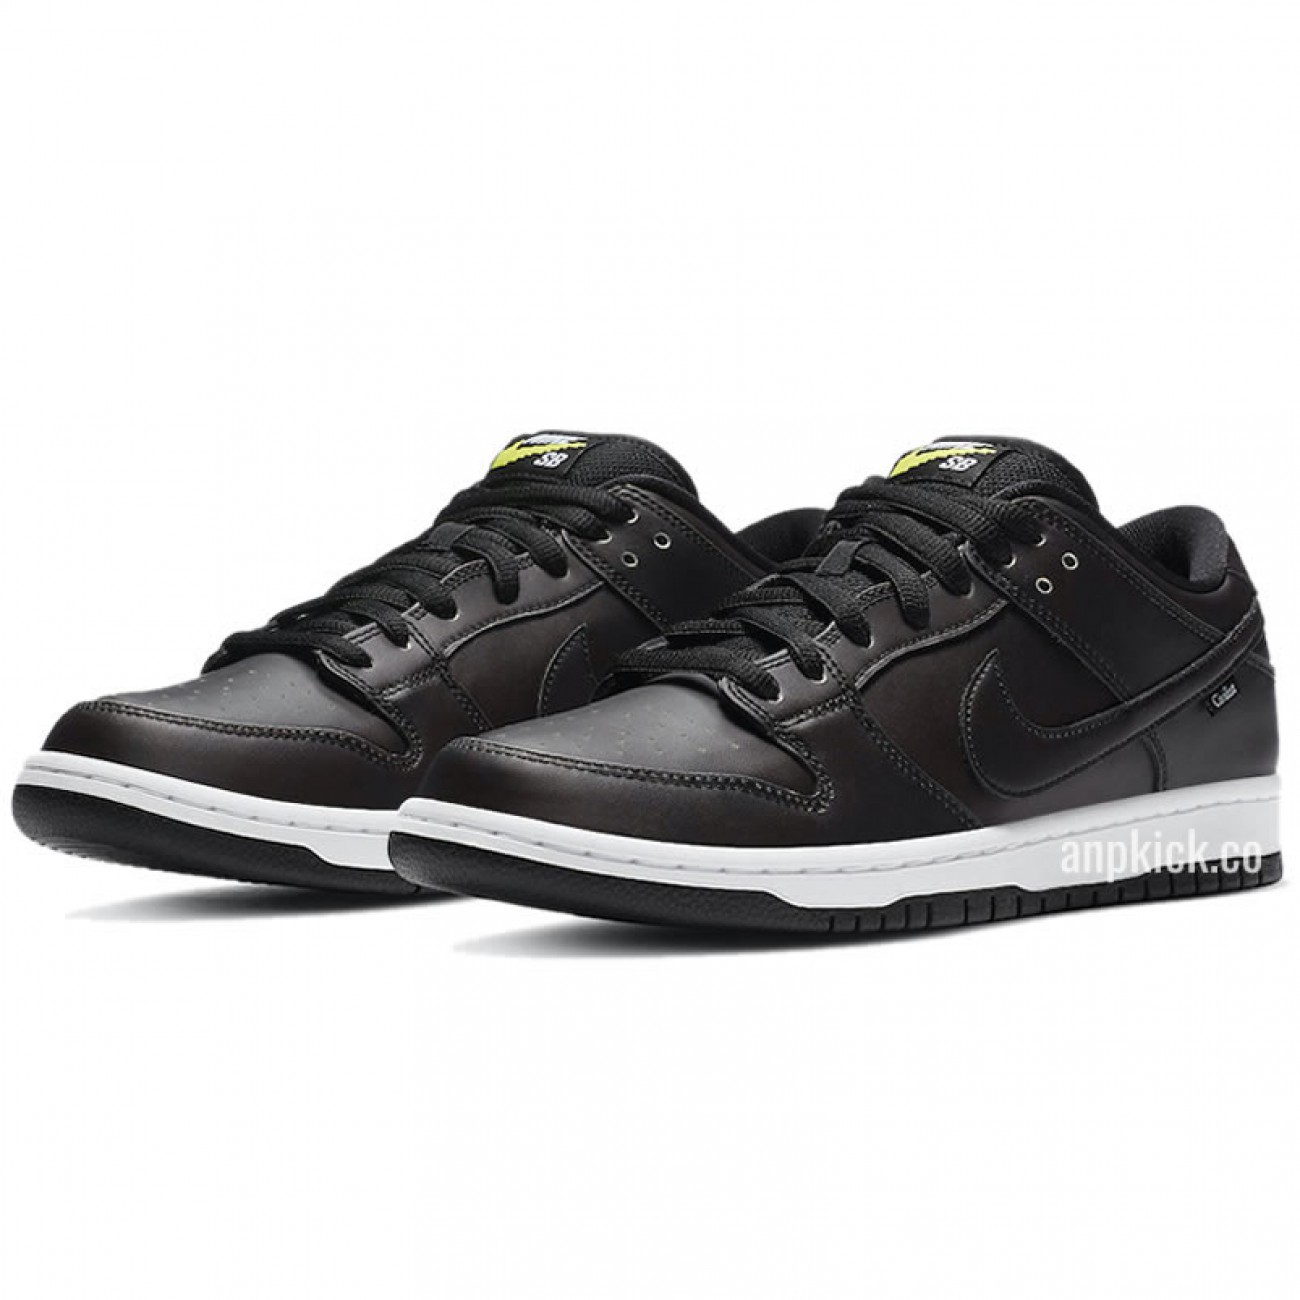 Civilist Berlin x Nike SB Dunk Low Shoes CZ5123-001 Release Date